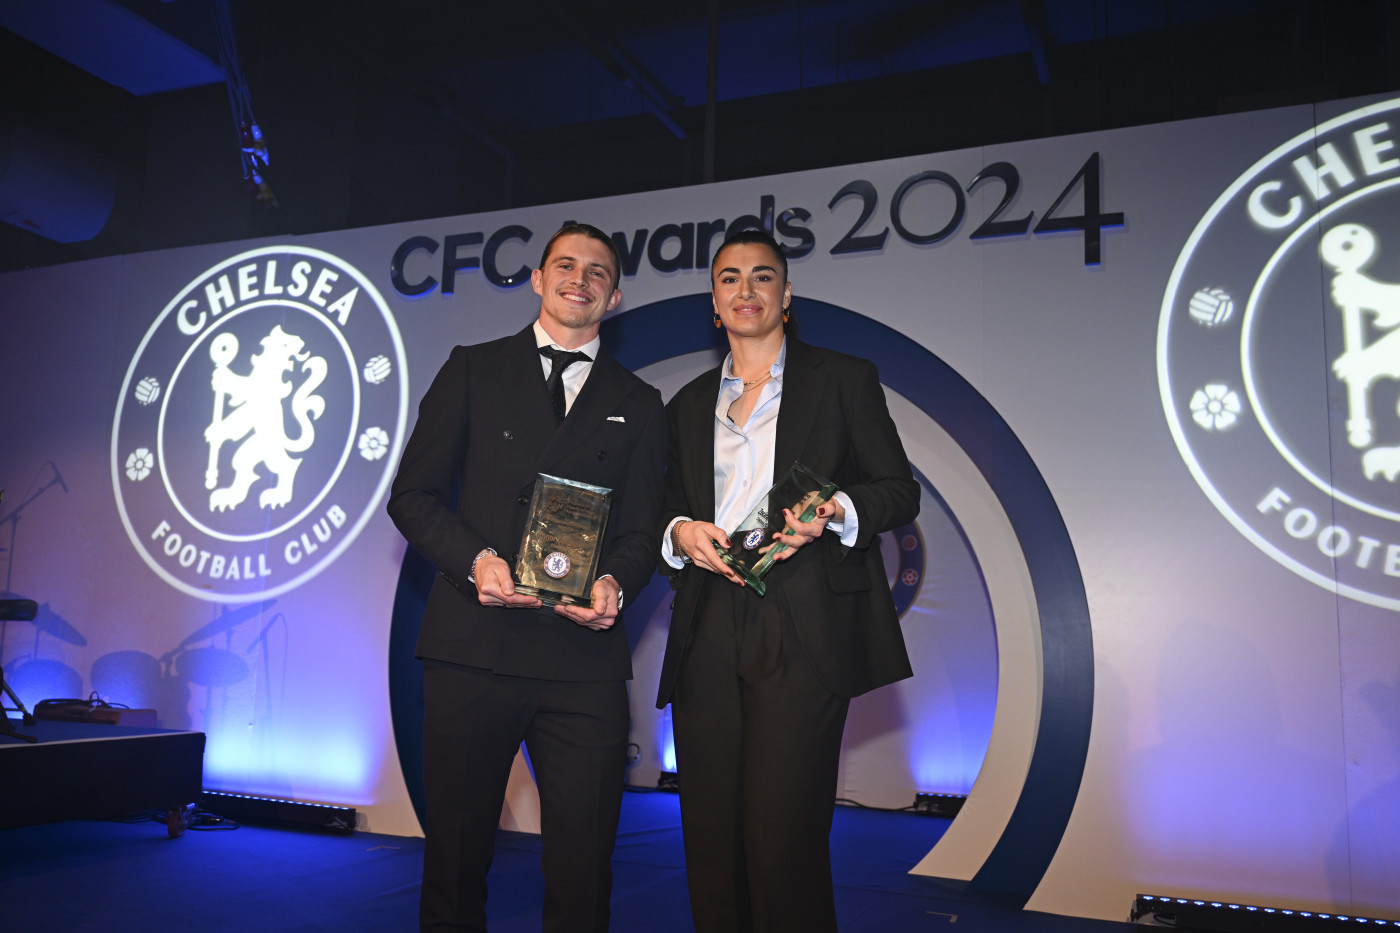 Gallagher and Musovic both won the PFA Community Champion awards